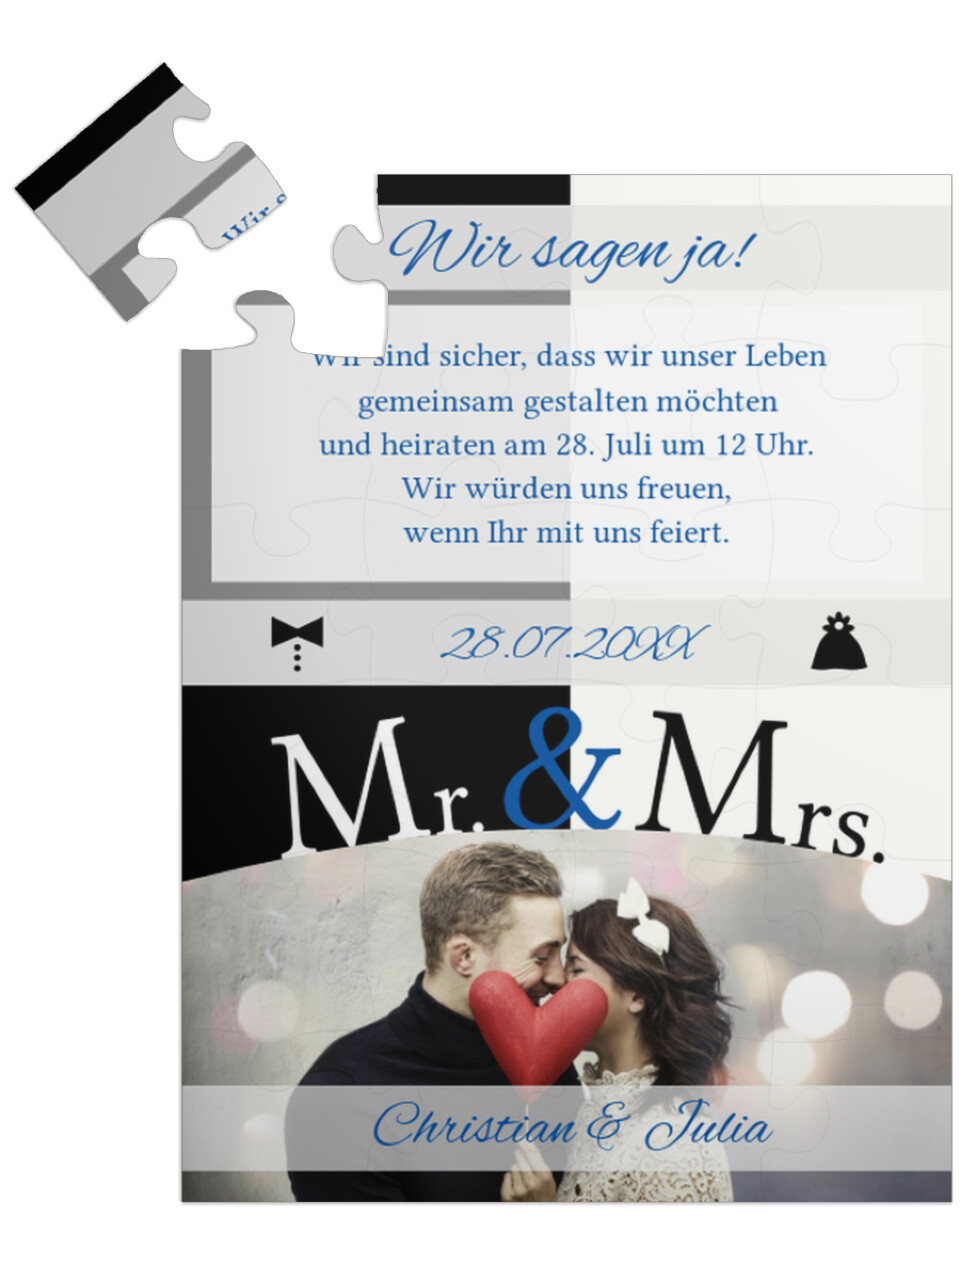 "Mr & Mrs" in Hochformat königsblau